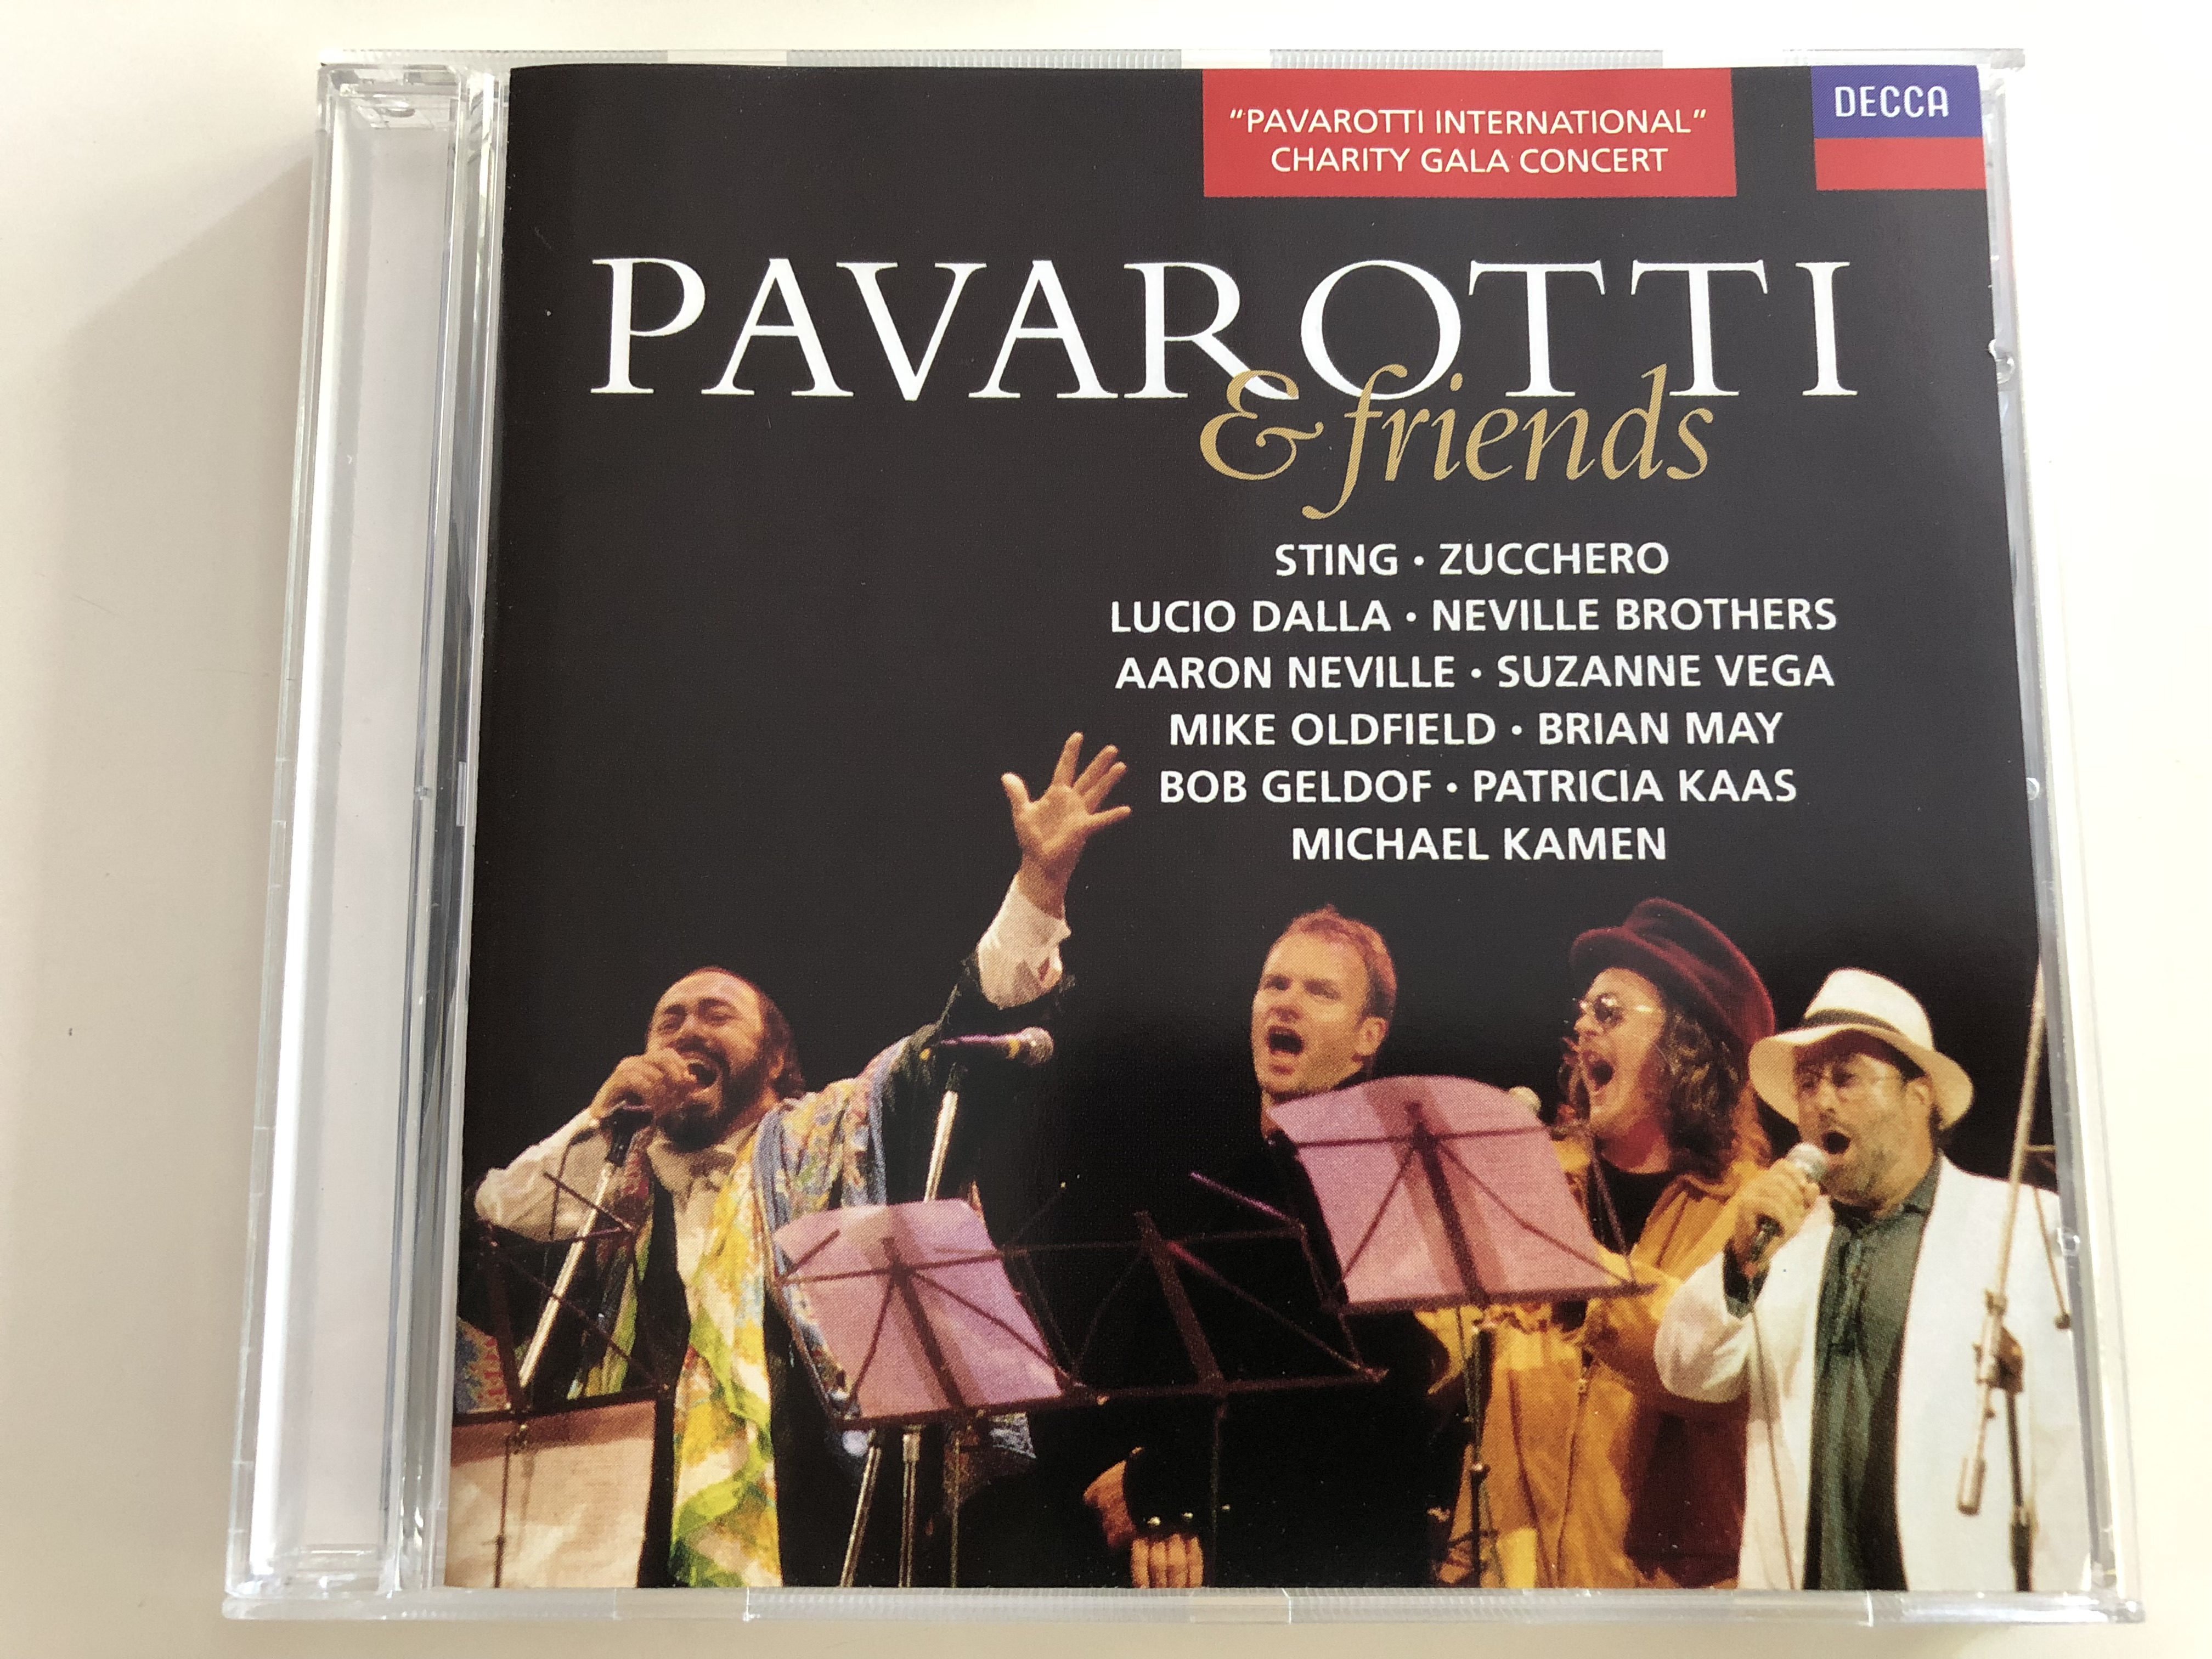 pavarotti-friends-sting-zucchero-lucio-dalla-neville-brothers-brian-may-bob-geldolf-pavarotti-international-charity-gala-concert-decca-audio-cd-1992-440-100-2-1-.jpg